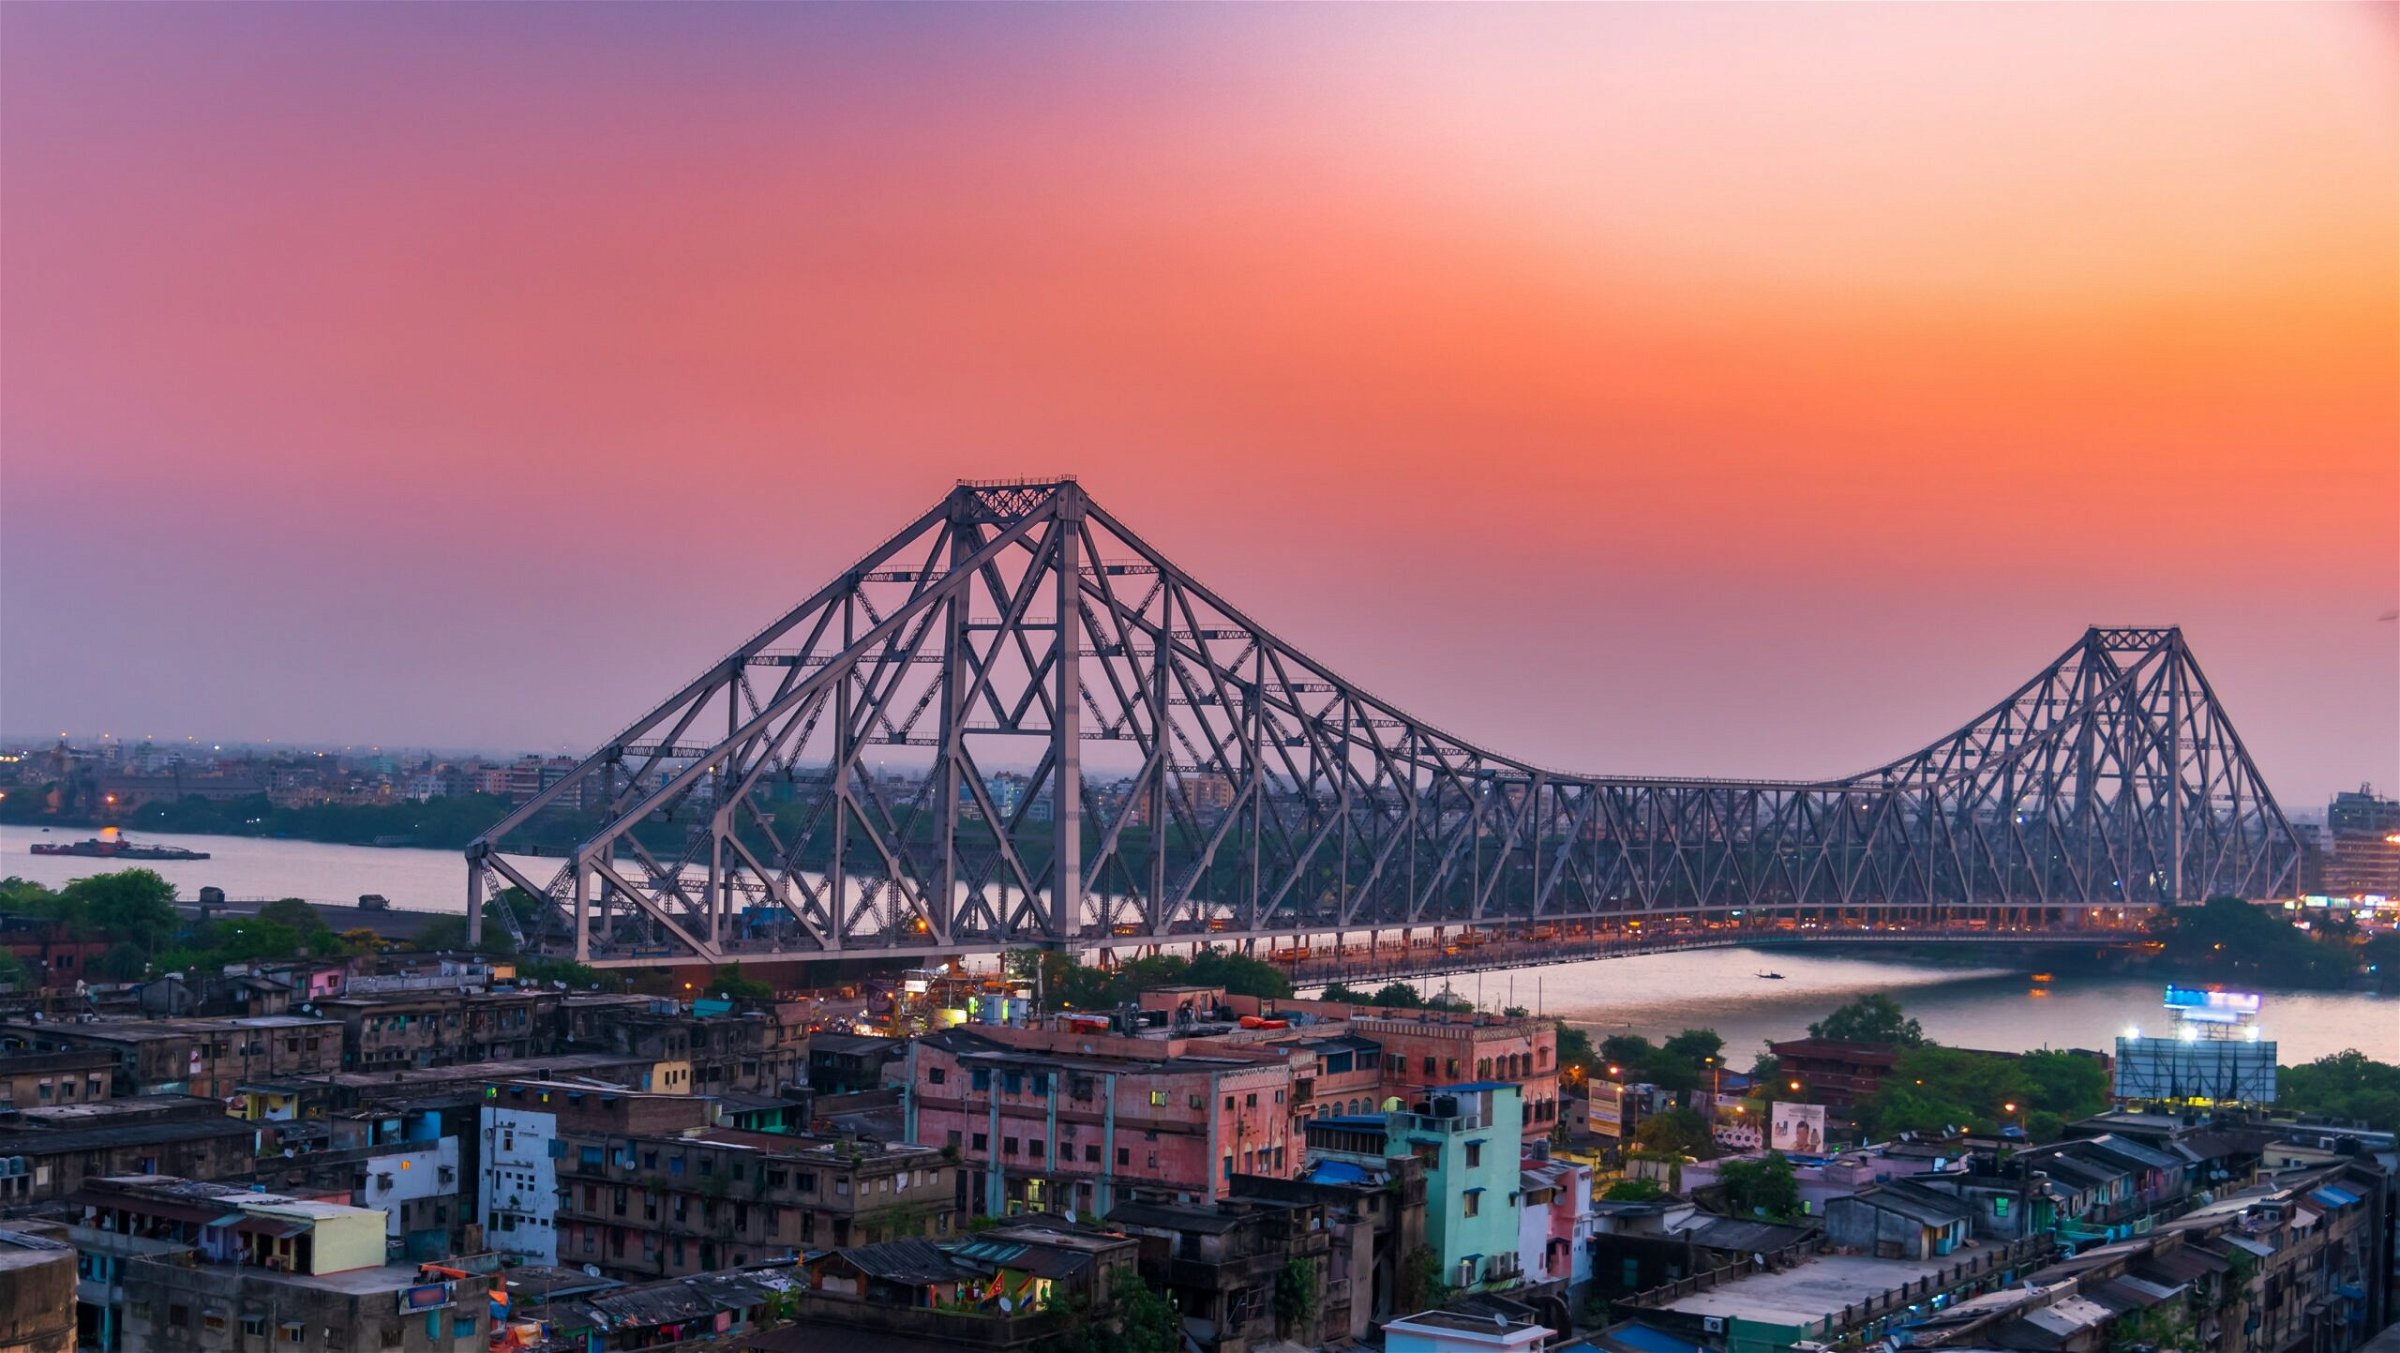 Kolkata property prices up by 7% in September quarter, higher than national average